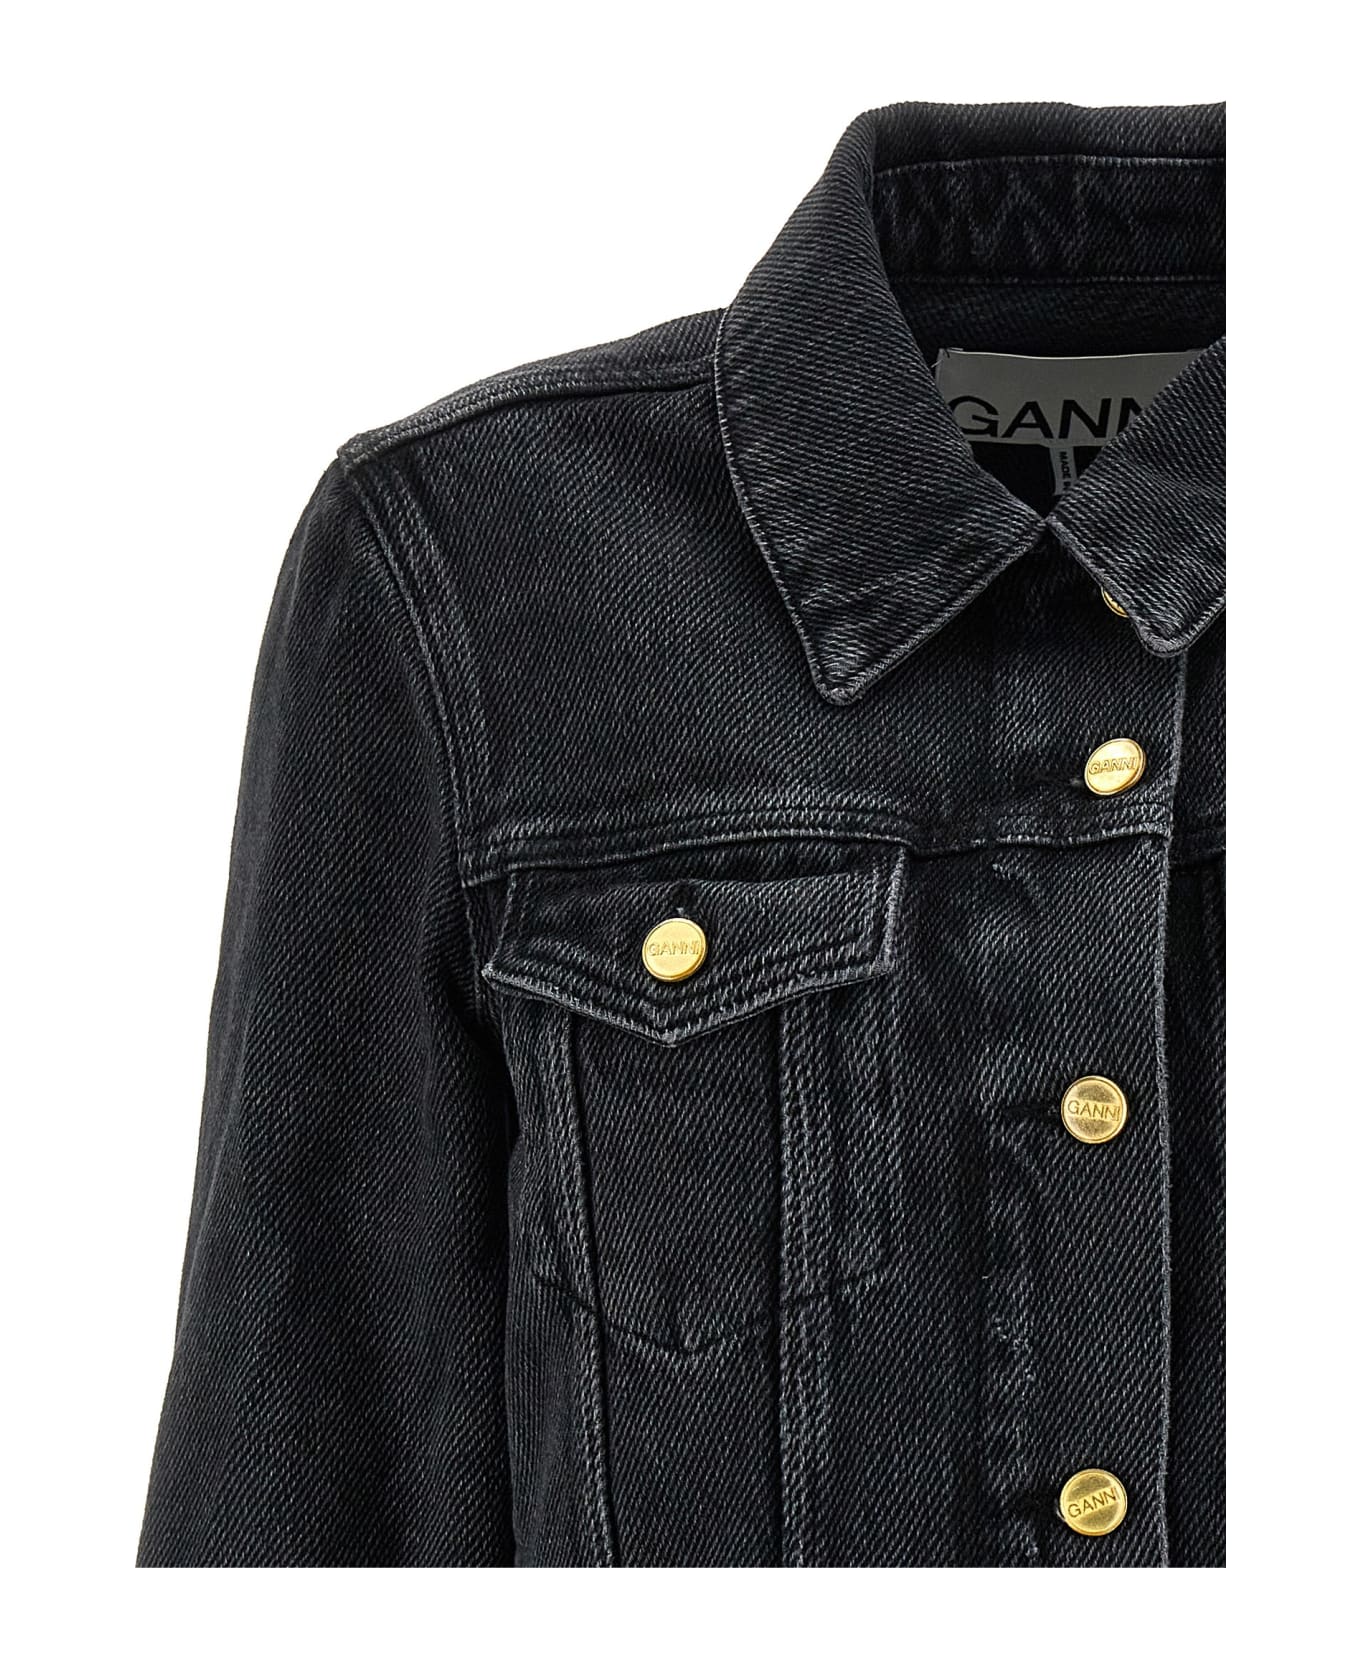 Ganni Cropped Denim Jacket - Black  